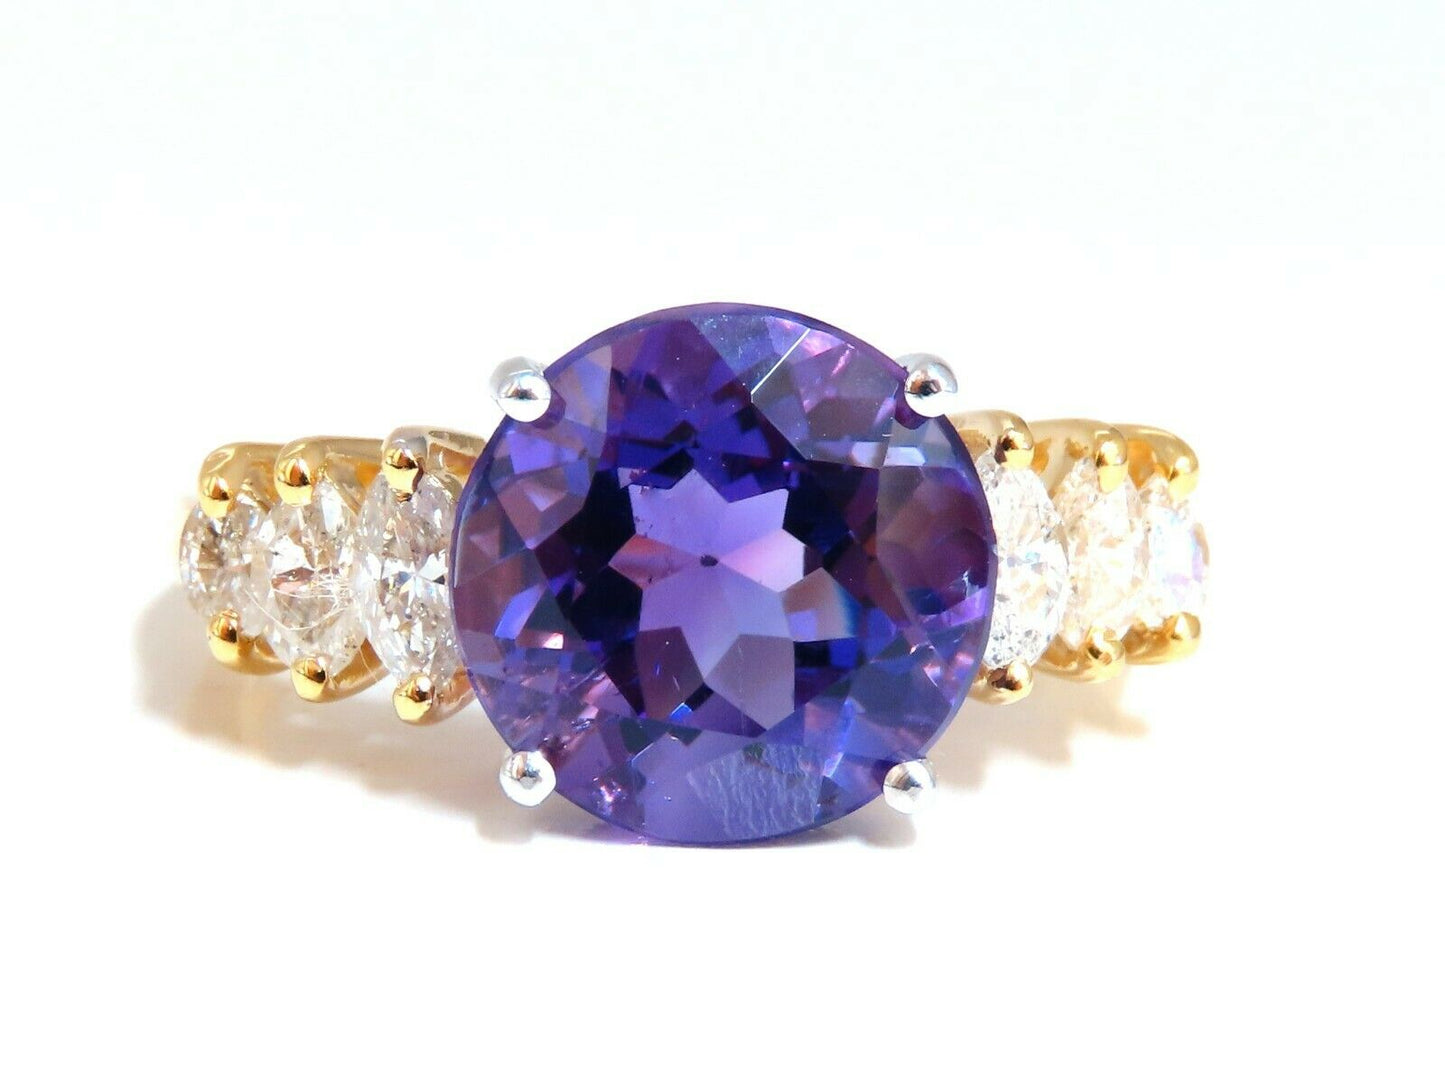 4.45ct Natural Round Vivid Purple Amethyst Diamond Ring 14 Karat